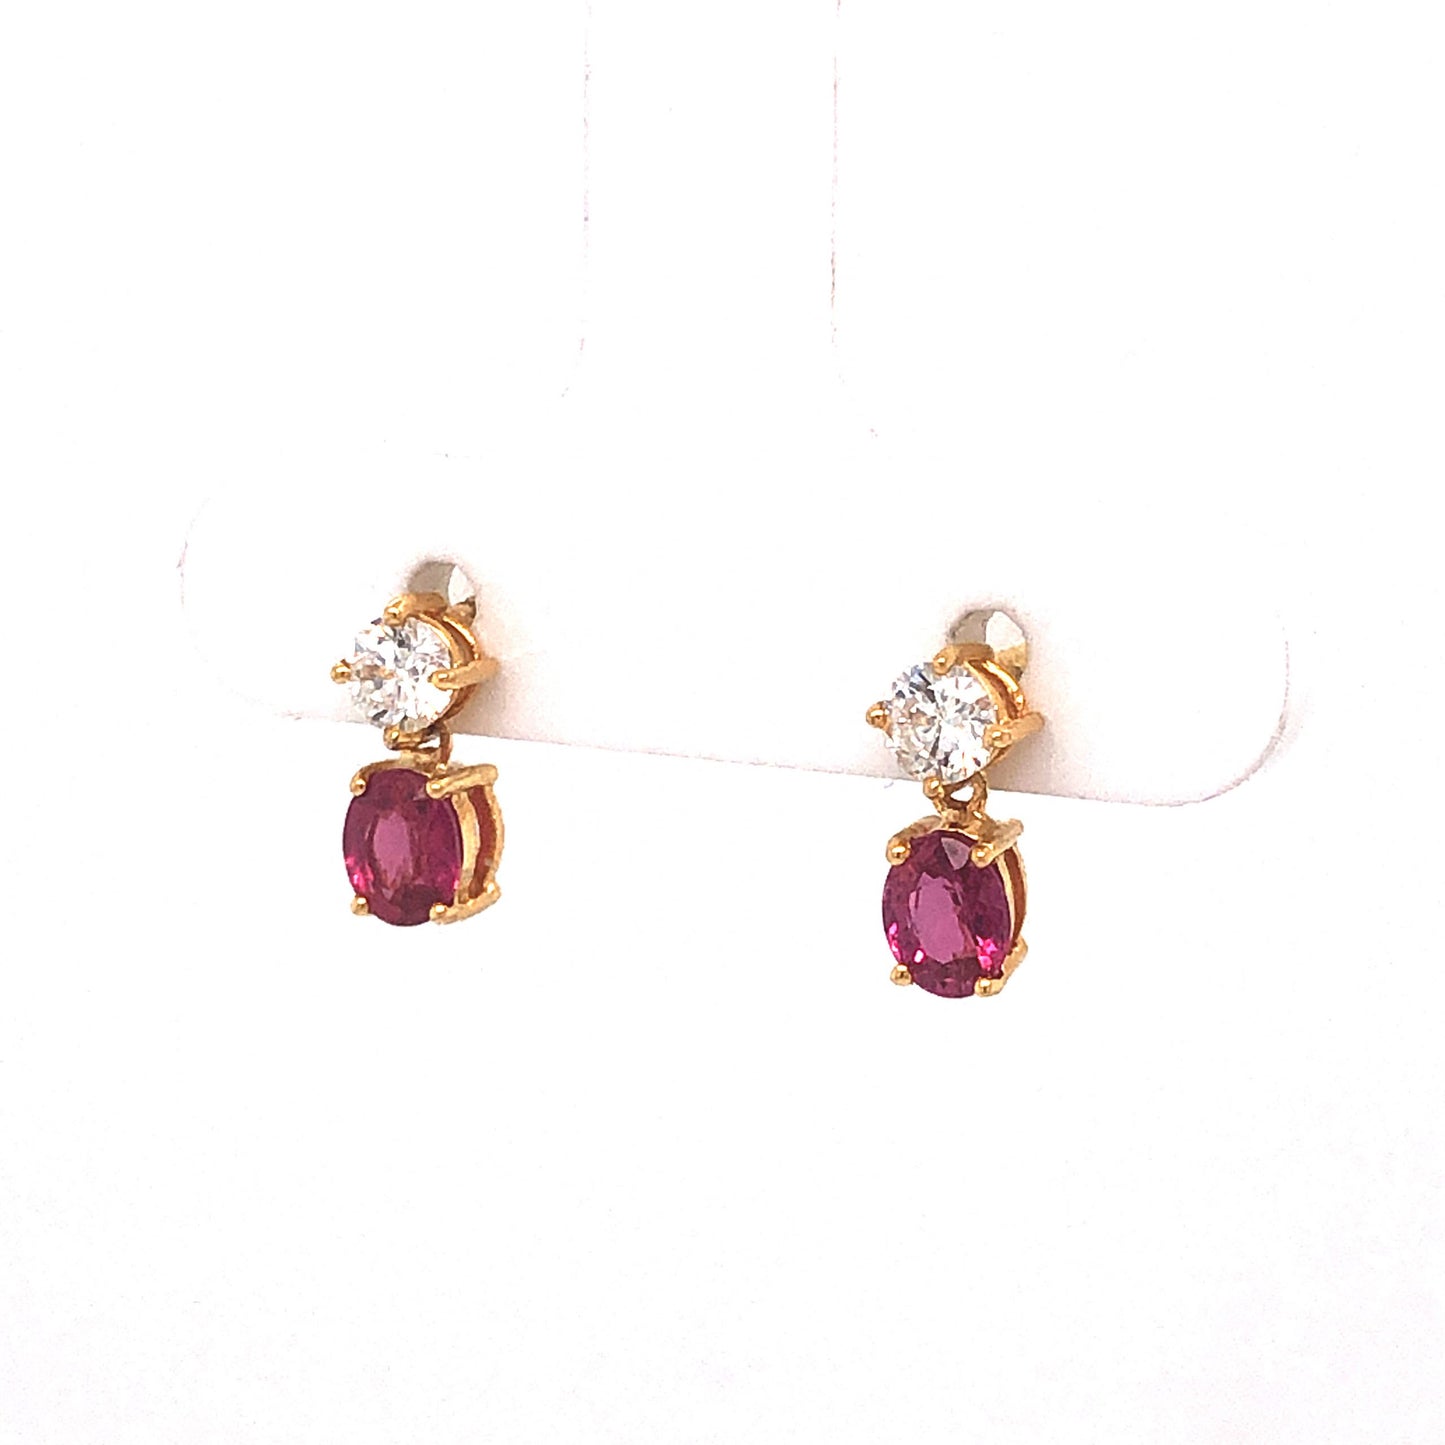 Stacked Ruby & Diamond Stud Earrings in 18k Yellow Gold